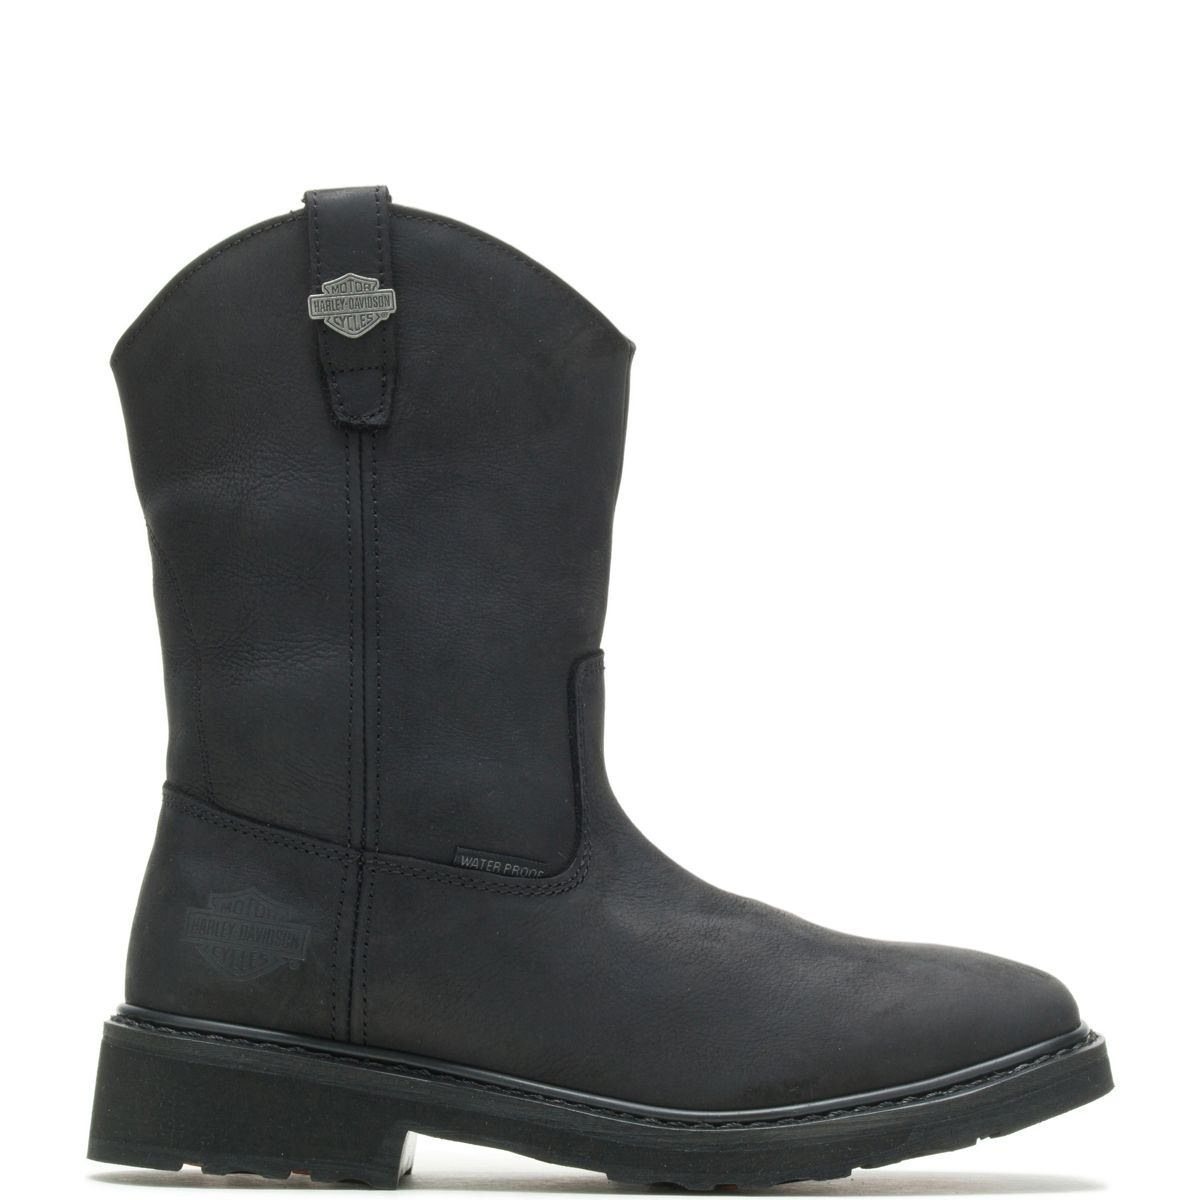 HARLEY-DAVIDSON WORK Men's Altman Western Classic Soft Toe Work Boot Black - D93561 Black/black - Black/black, 12